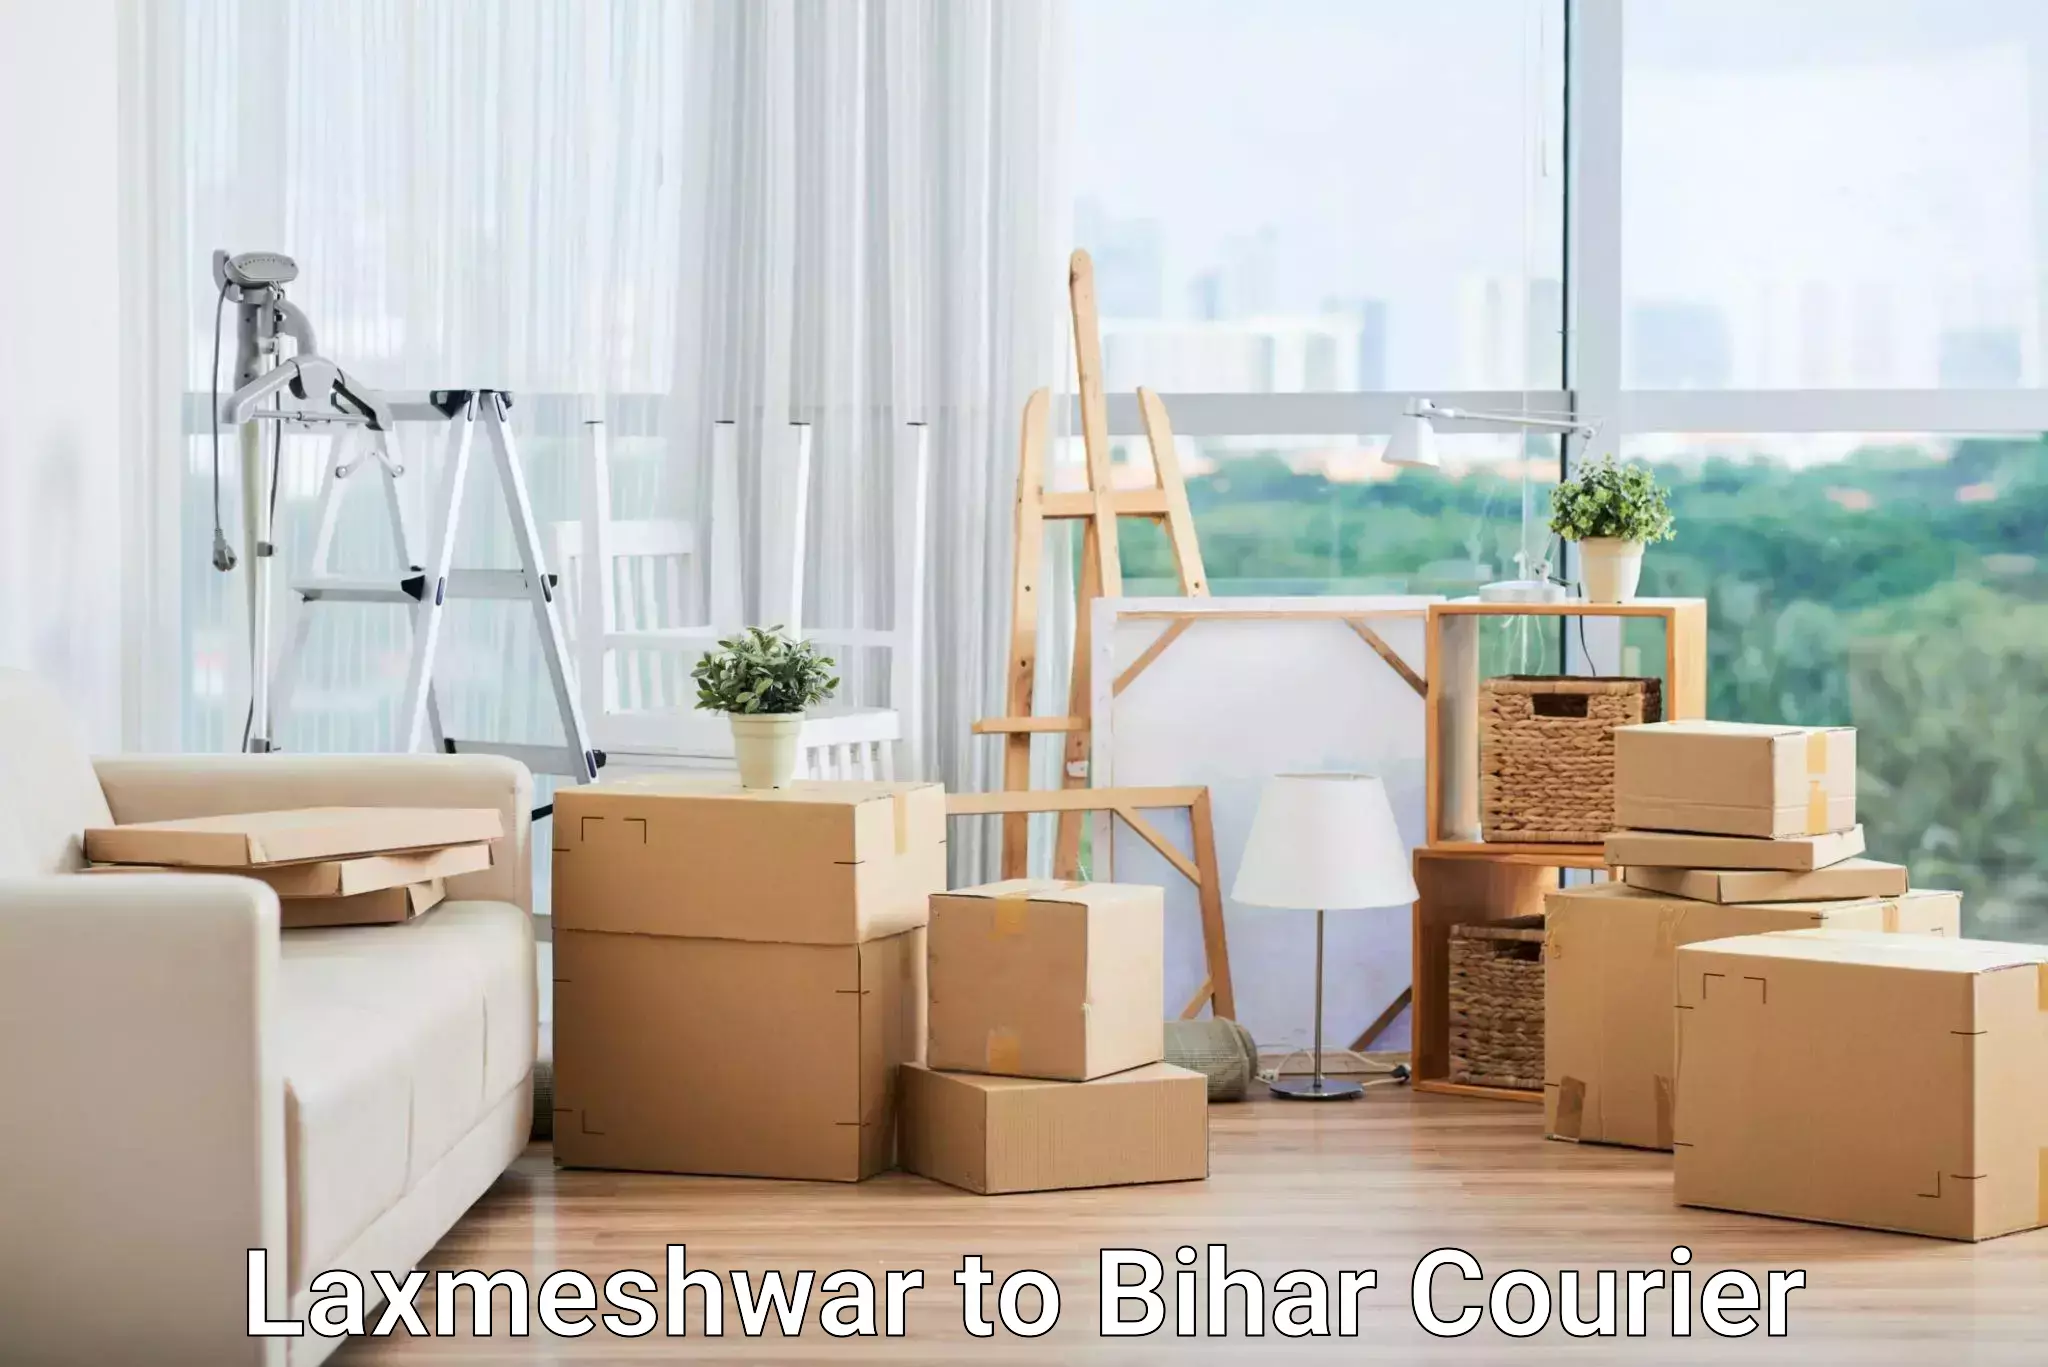 Fastest parcel delivery Laxmeshwar to Bihar